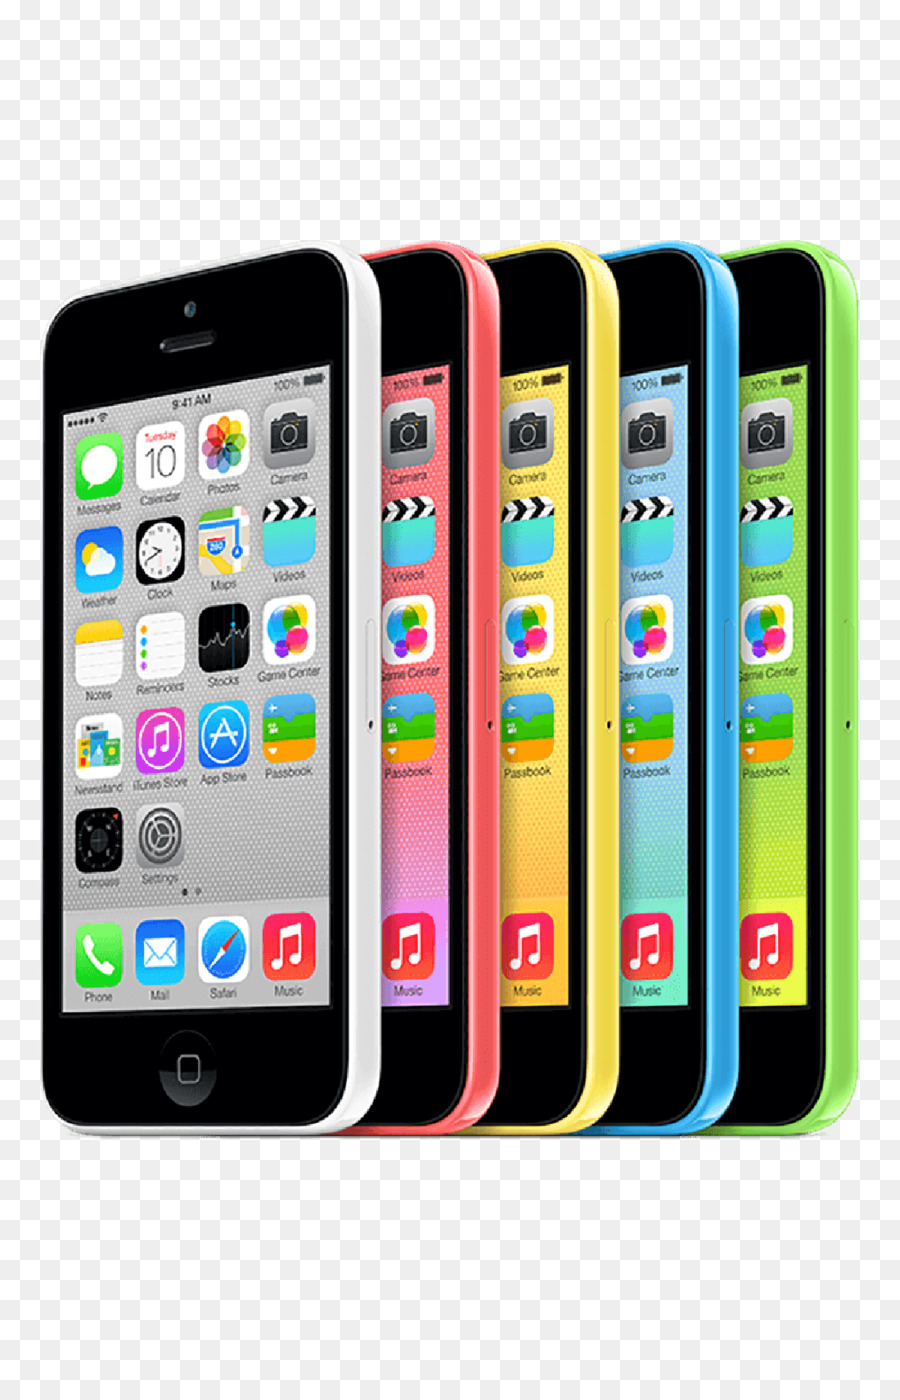 iPhone 5c iPhone 5s von Apple Smartphone - Apple